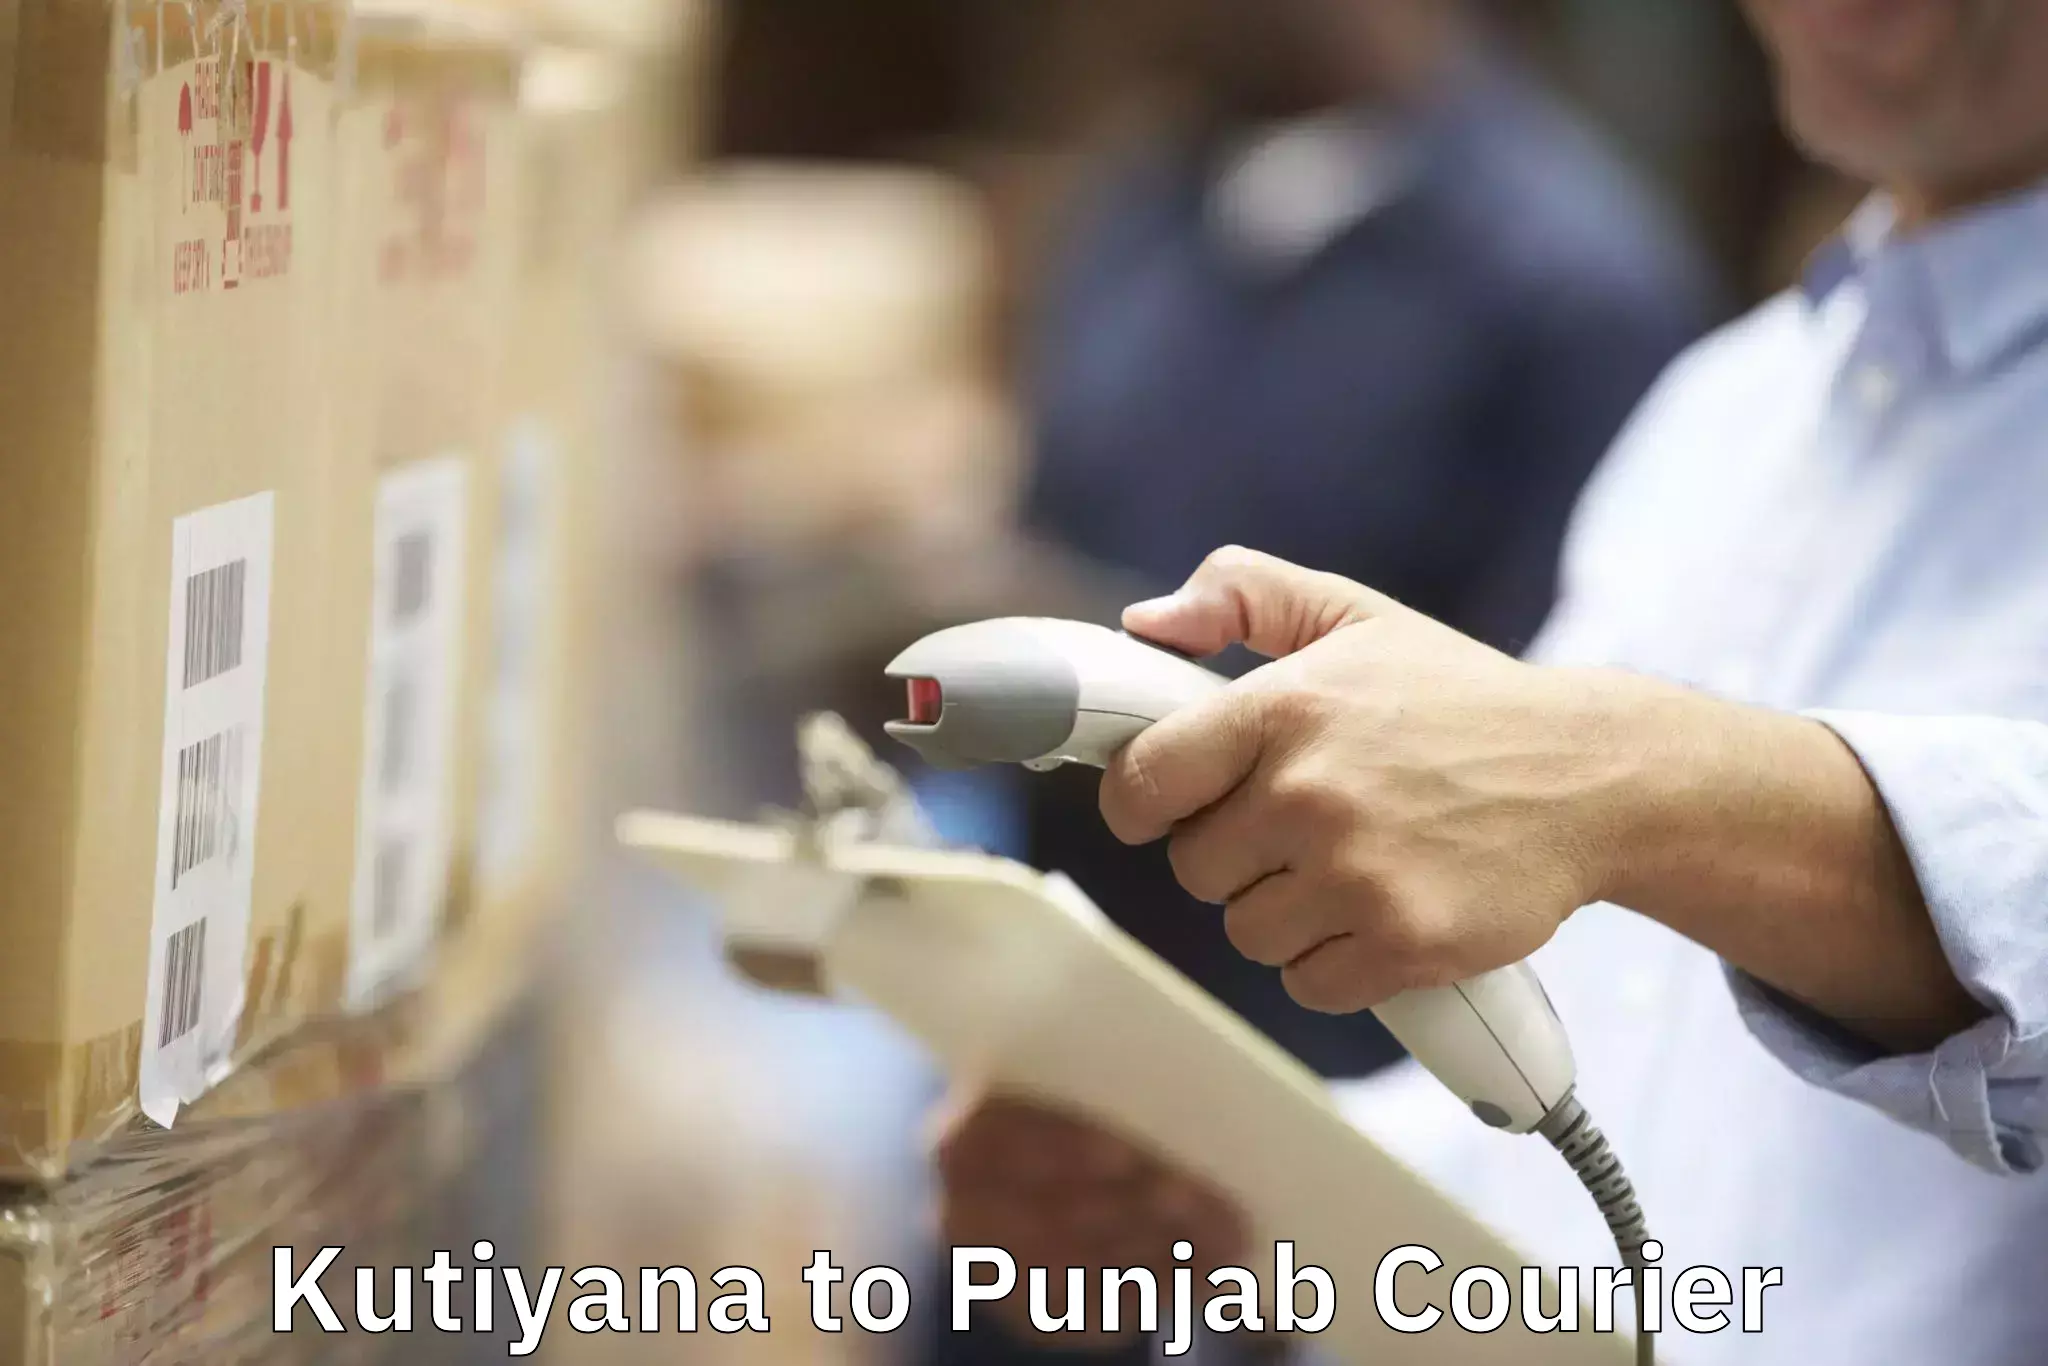 Furniture delivery service Kutiyana to Amritsar